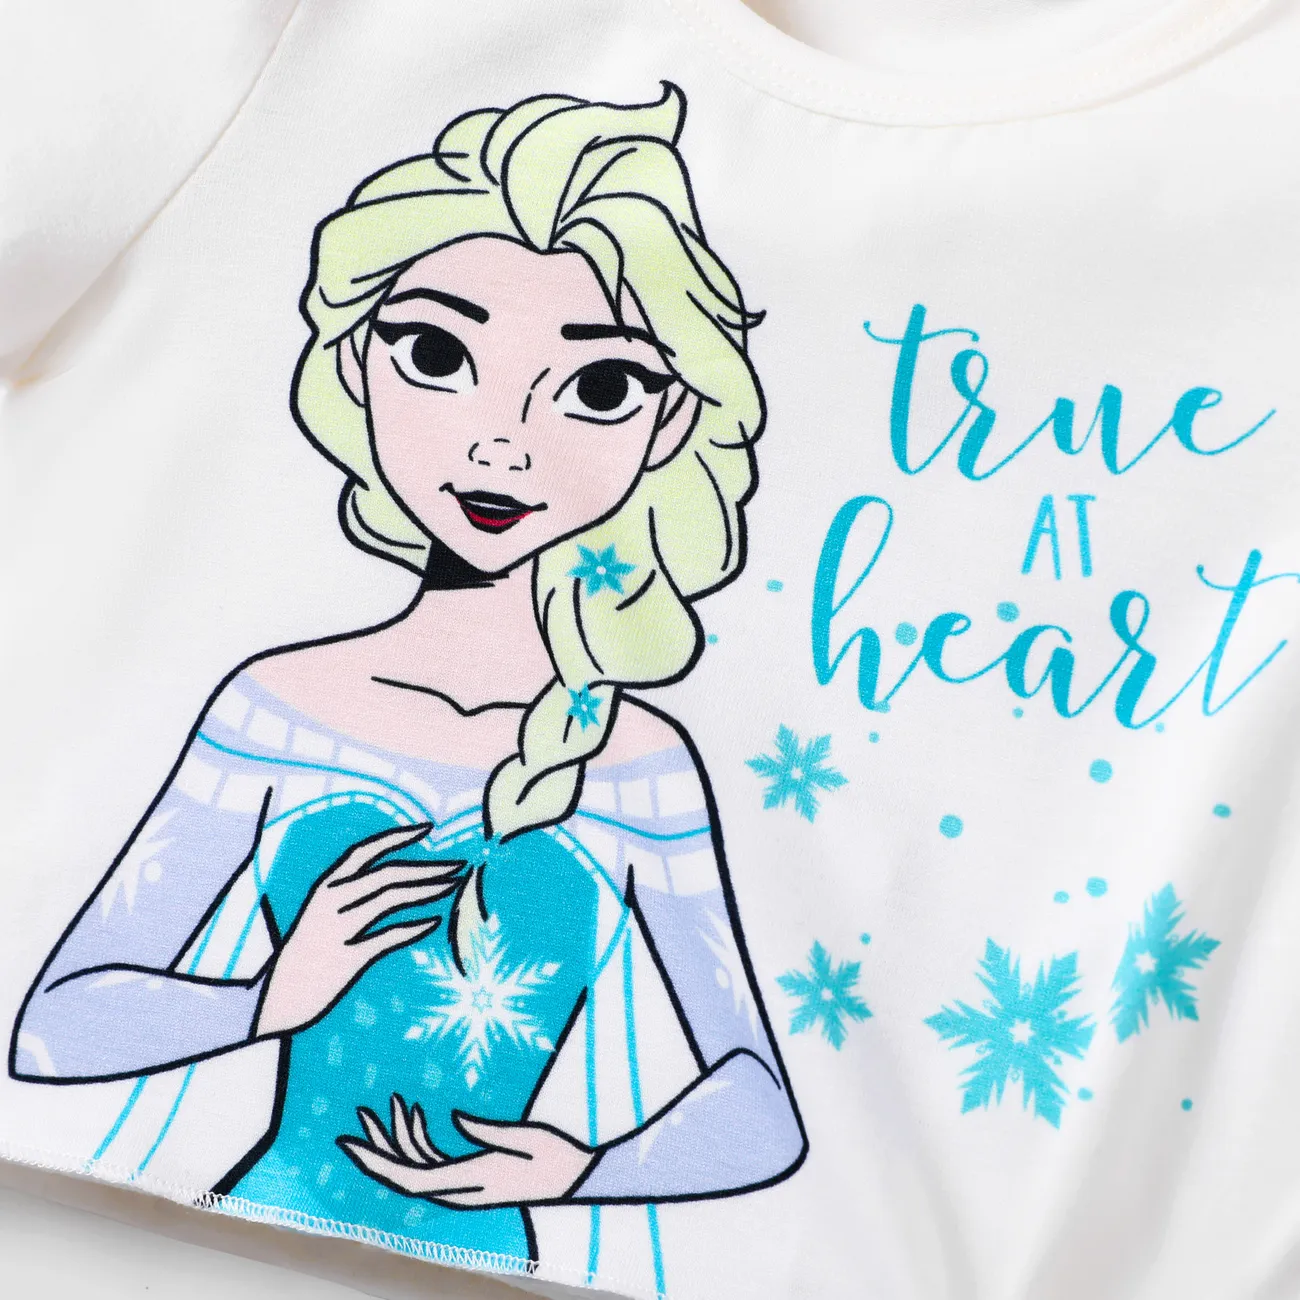 Disney Frozen Elsa 2pcs Toddler Girls Naia™ Character cake Skirt Suit Set
 Aqua Green big image 1